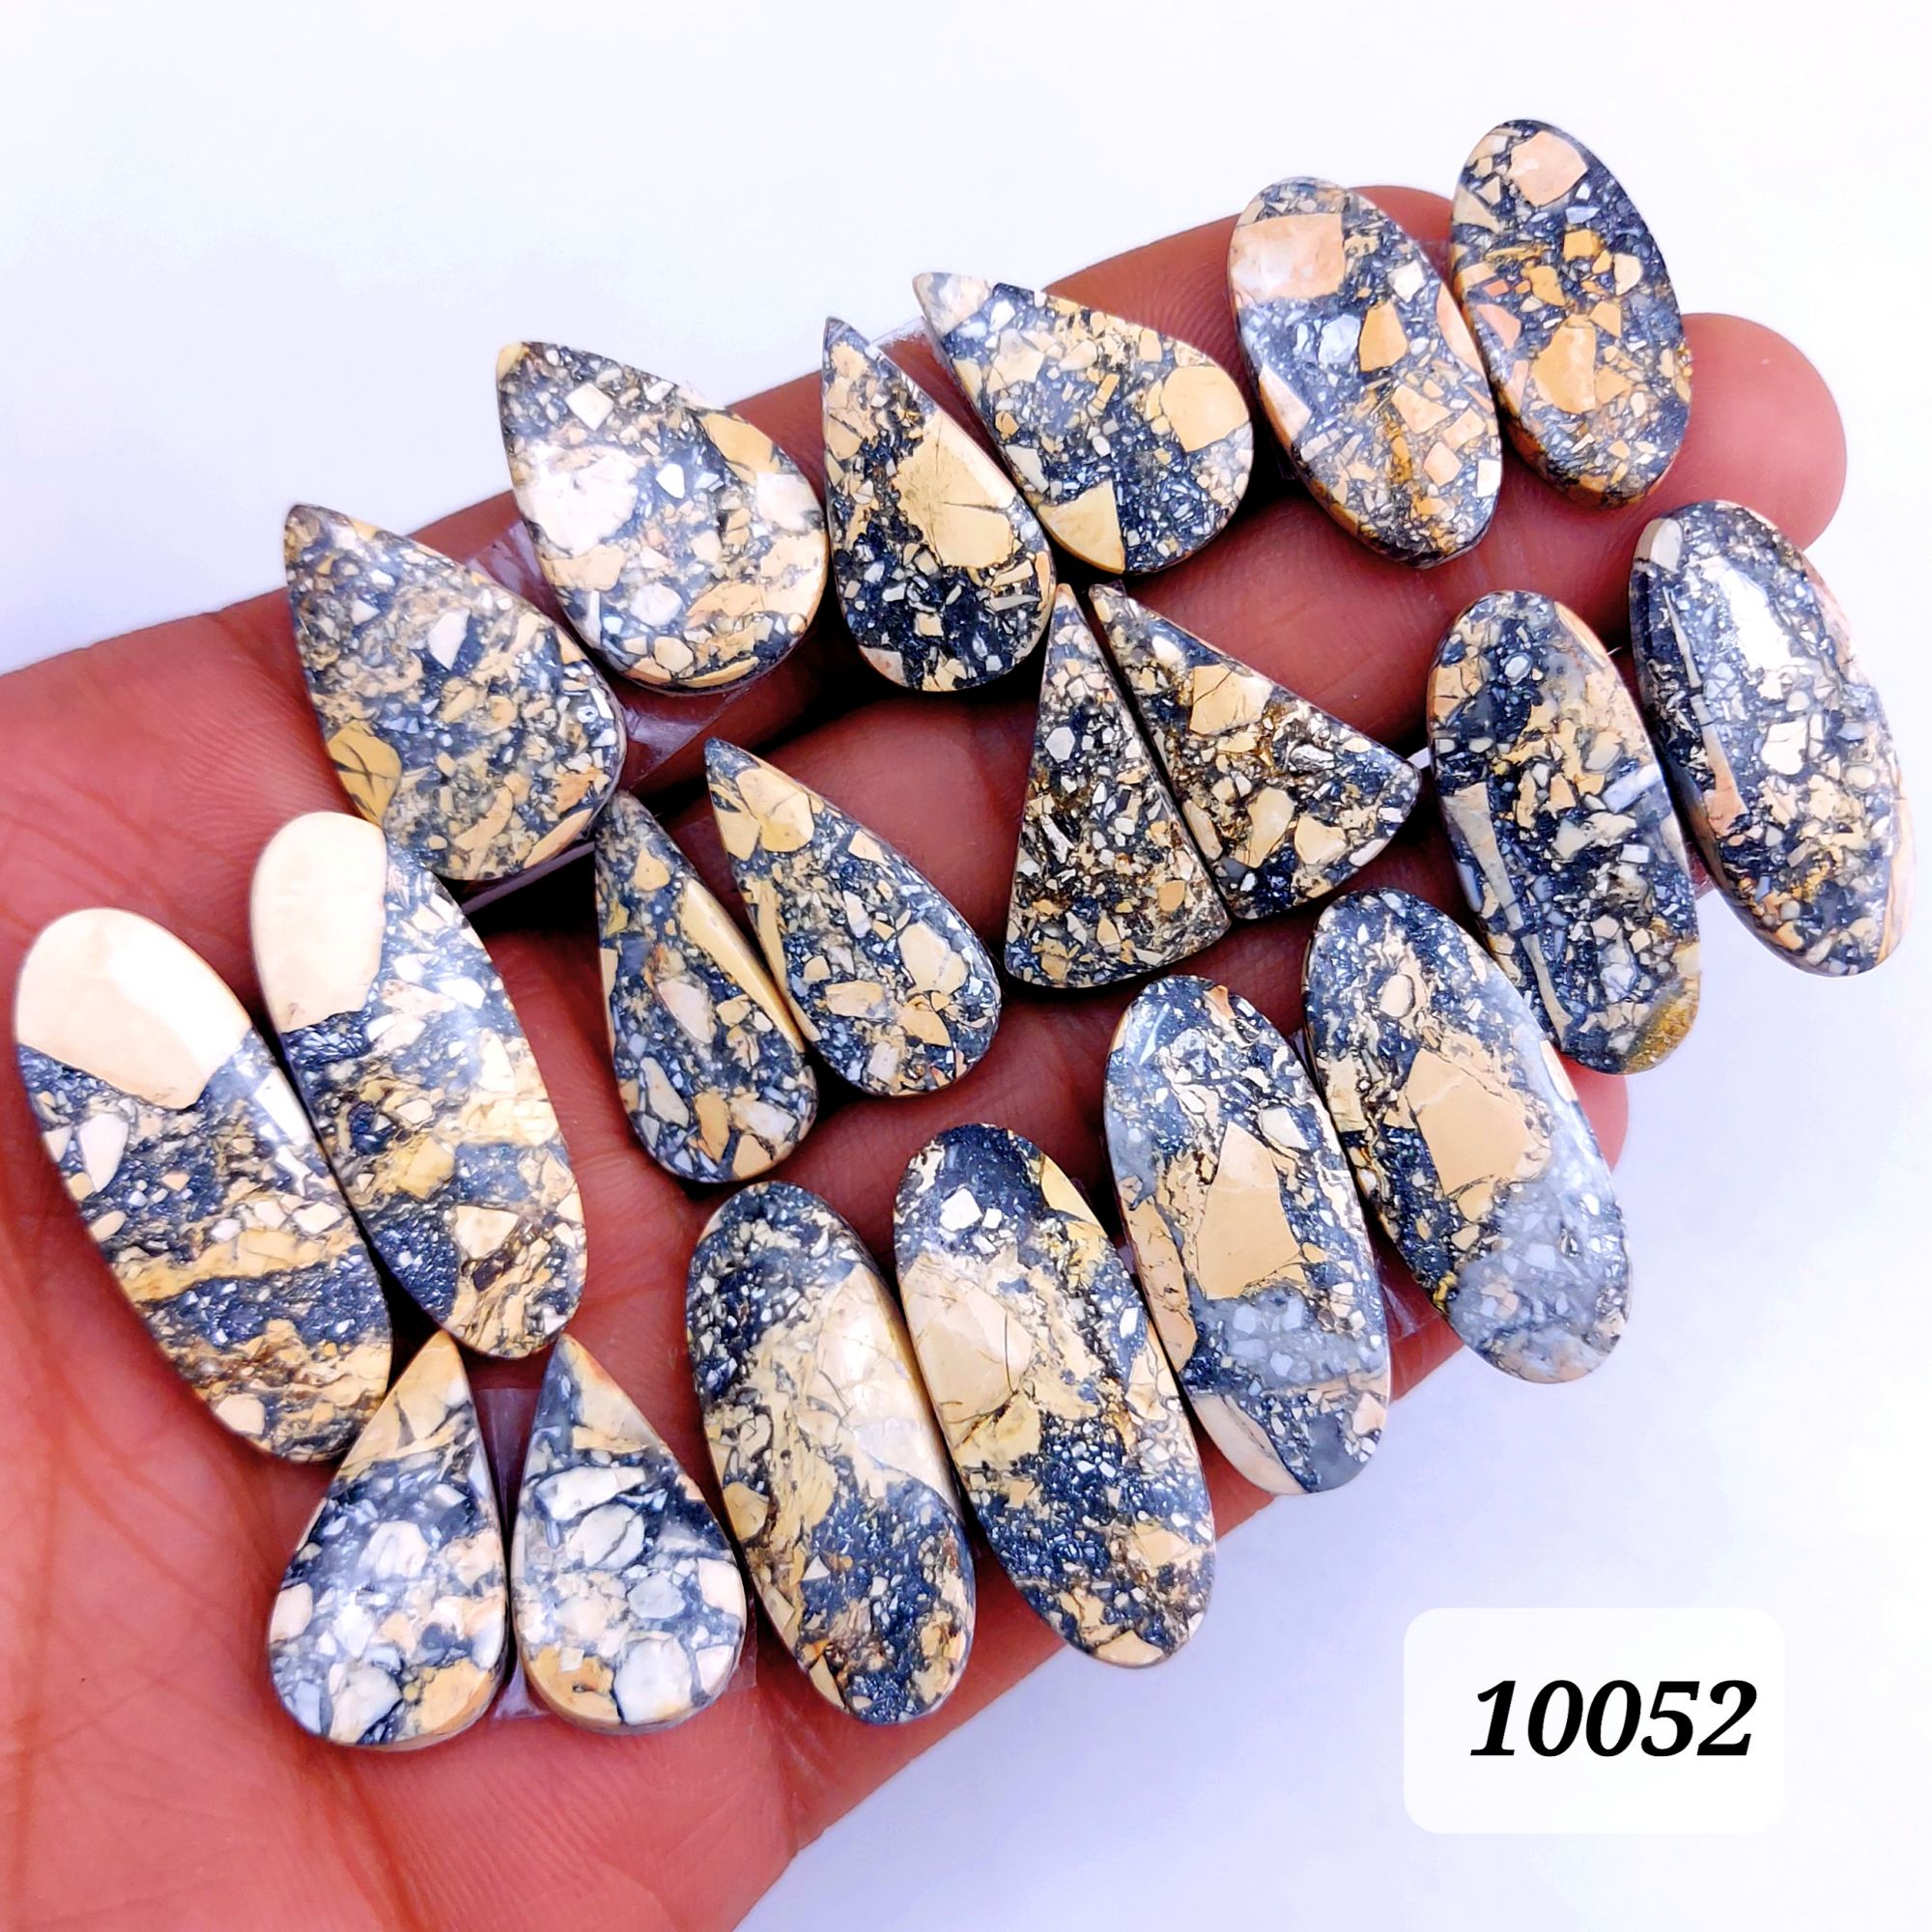 10Pcs 280Cts Natural Maligano Jasper Cabochon Pair Lot Back Side Unpolished Semi-Precious Gemstones For Jewelry Making 31x13 22x12mm #10052